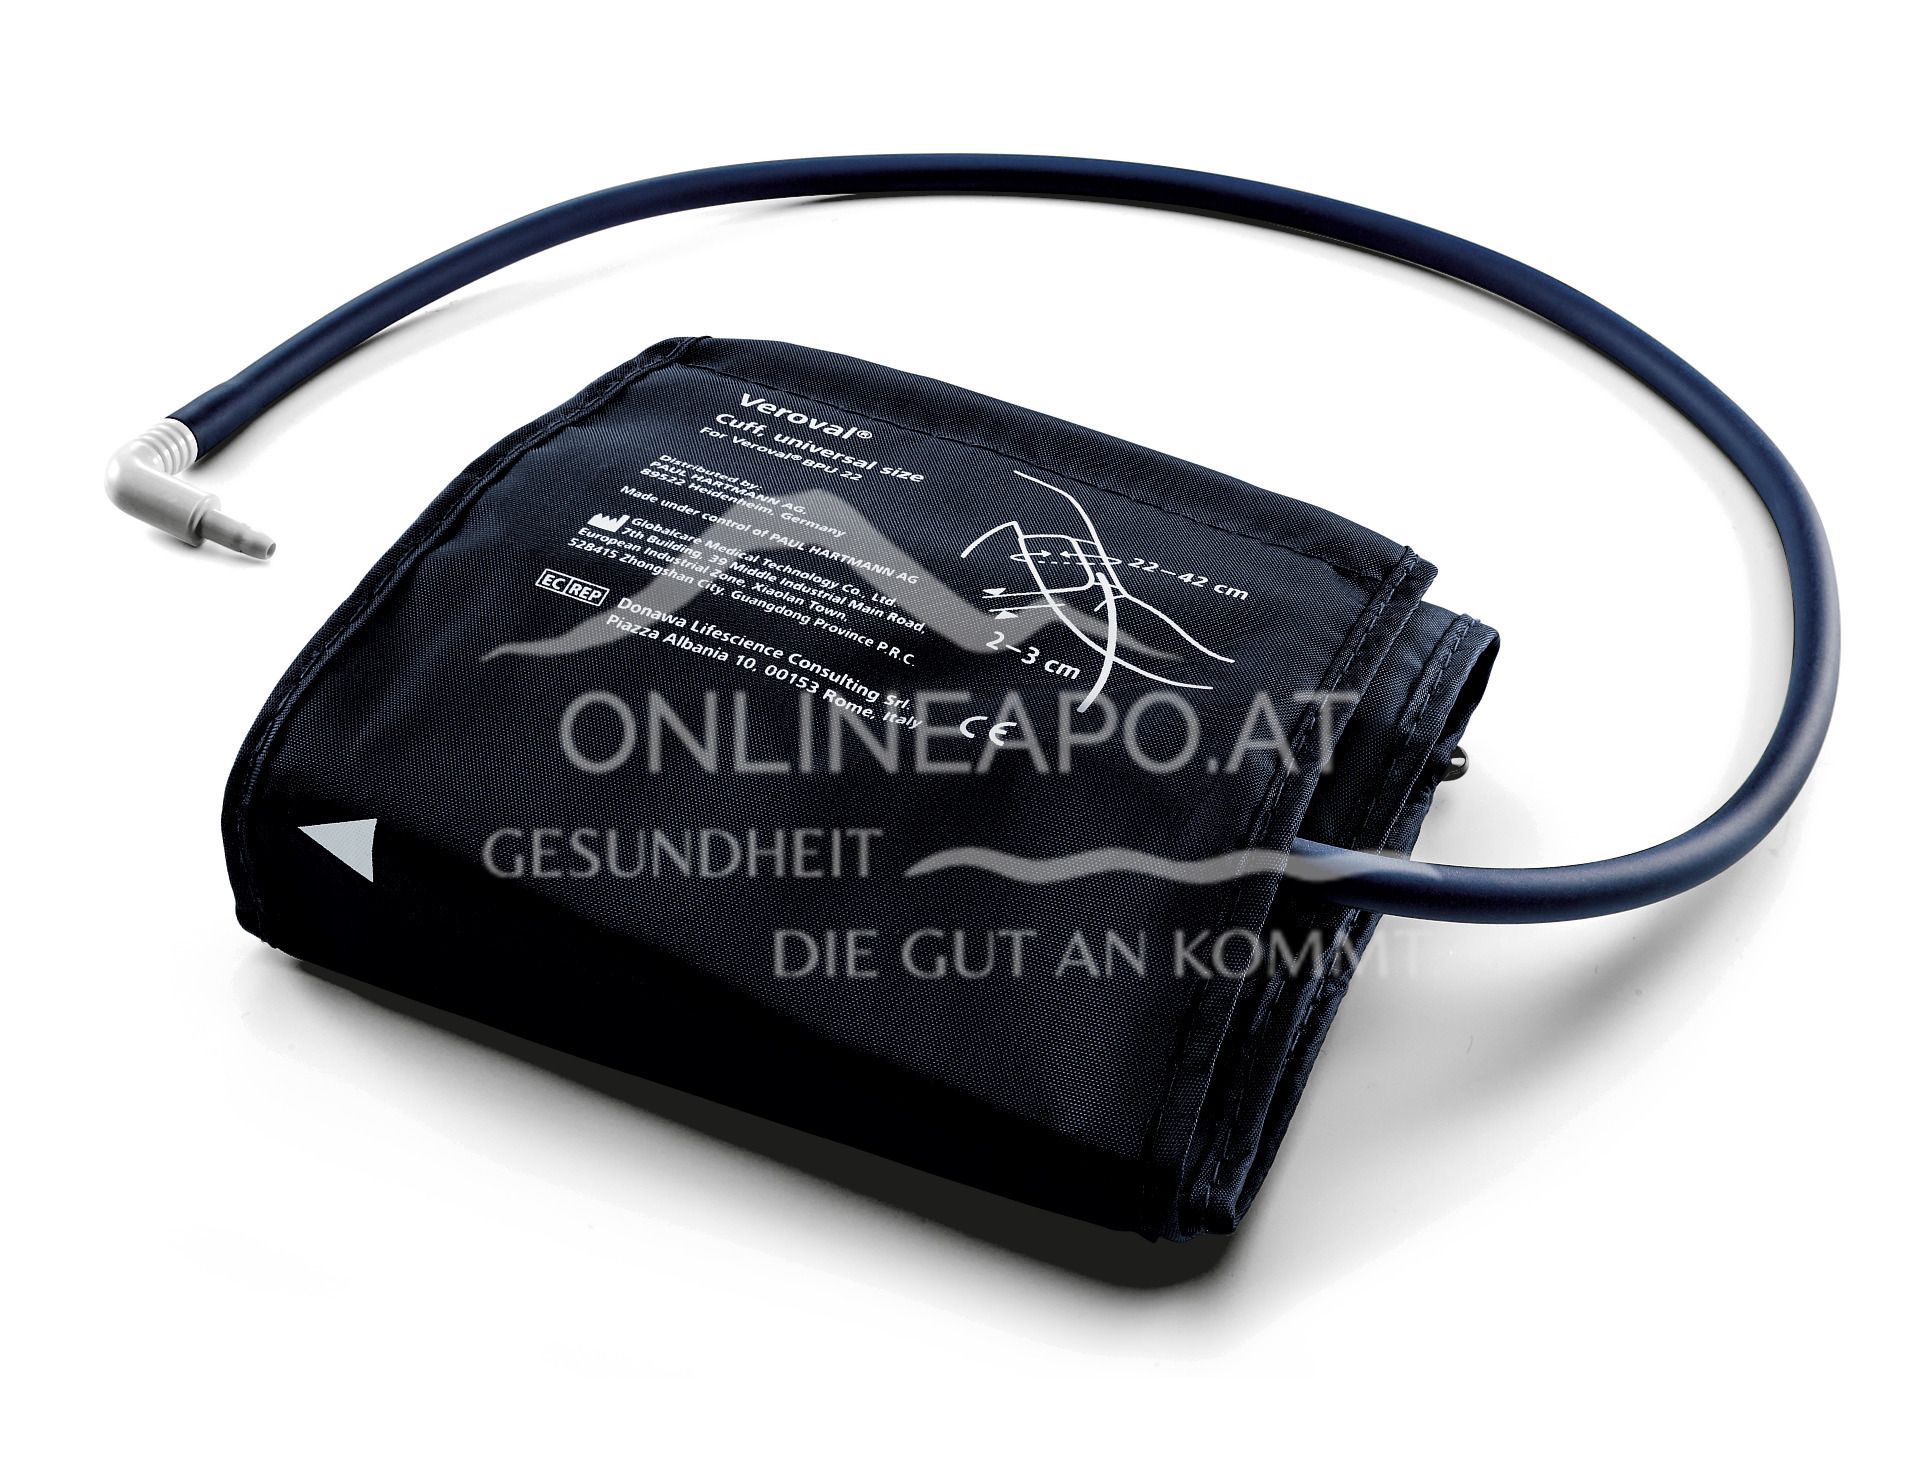 Veroval® COMPACT Oberarm-Blutdruckmessgerät mit Universalmanschette 22-42 cm